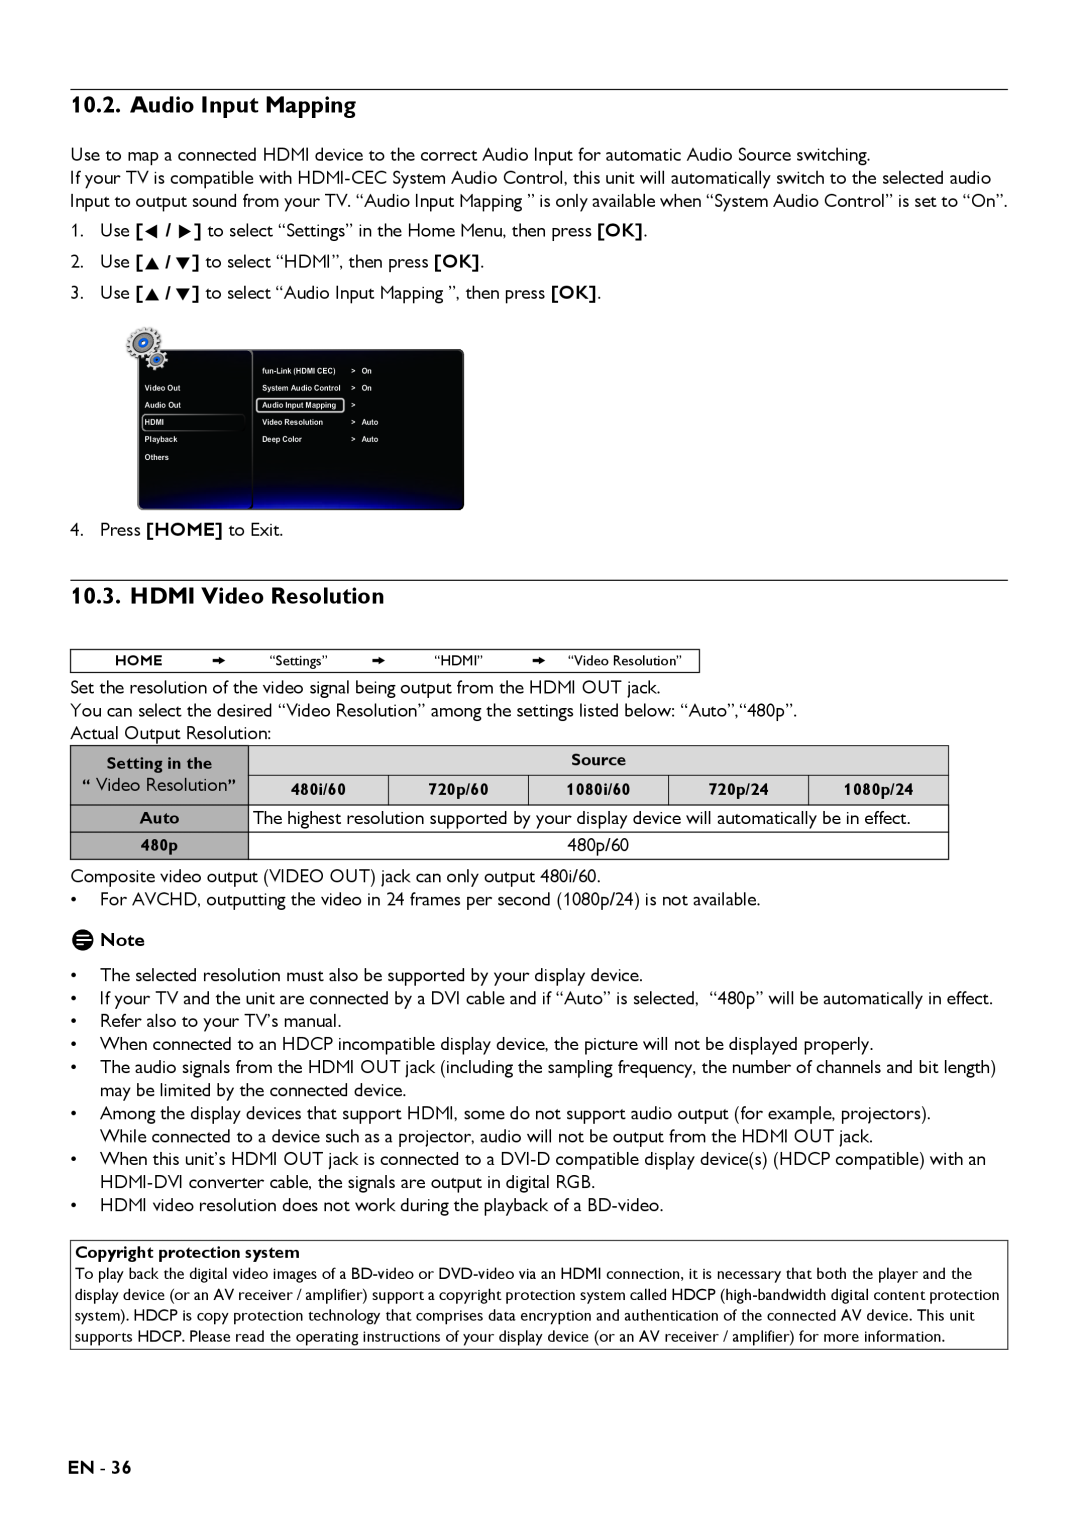 Magnavox MRD430B owner manual Audio Input Mapping, HDMI Video Resolution 